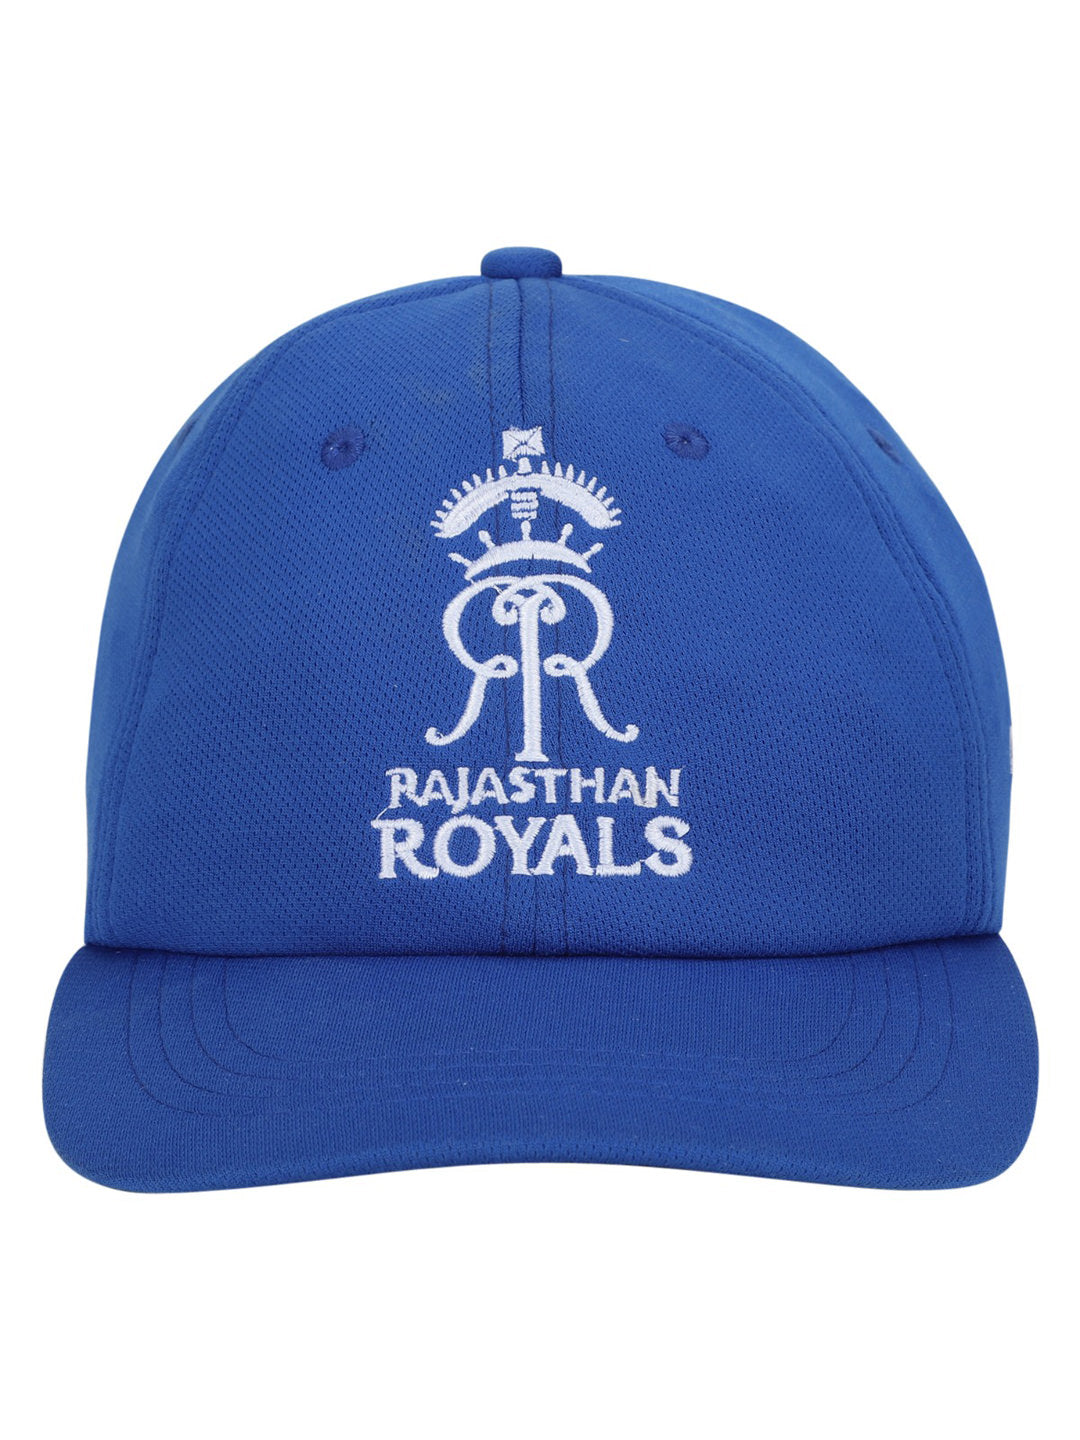 Rajasthan Royals Unisex Fanwear Cap RRFANCP001-M-Blue